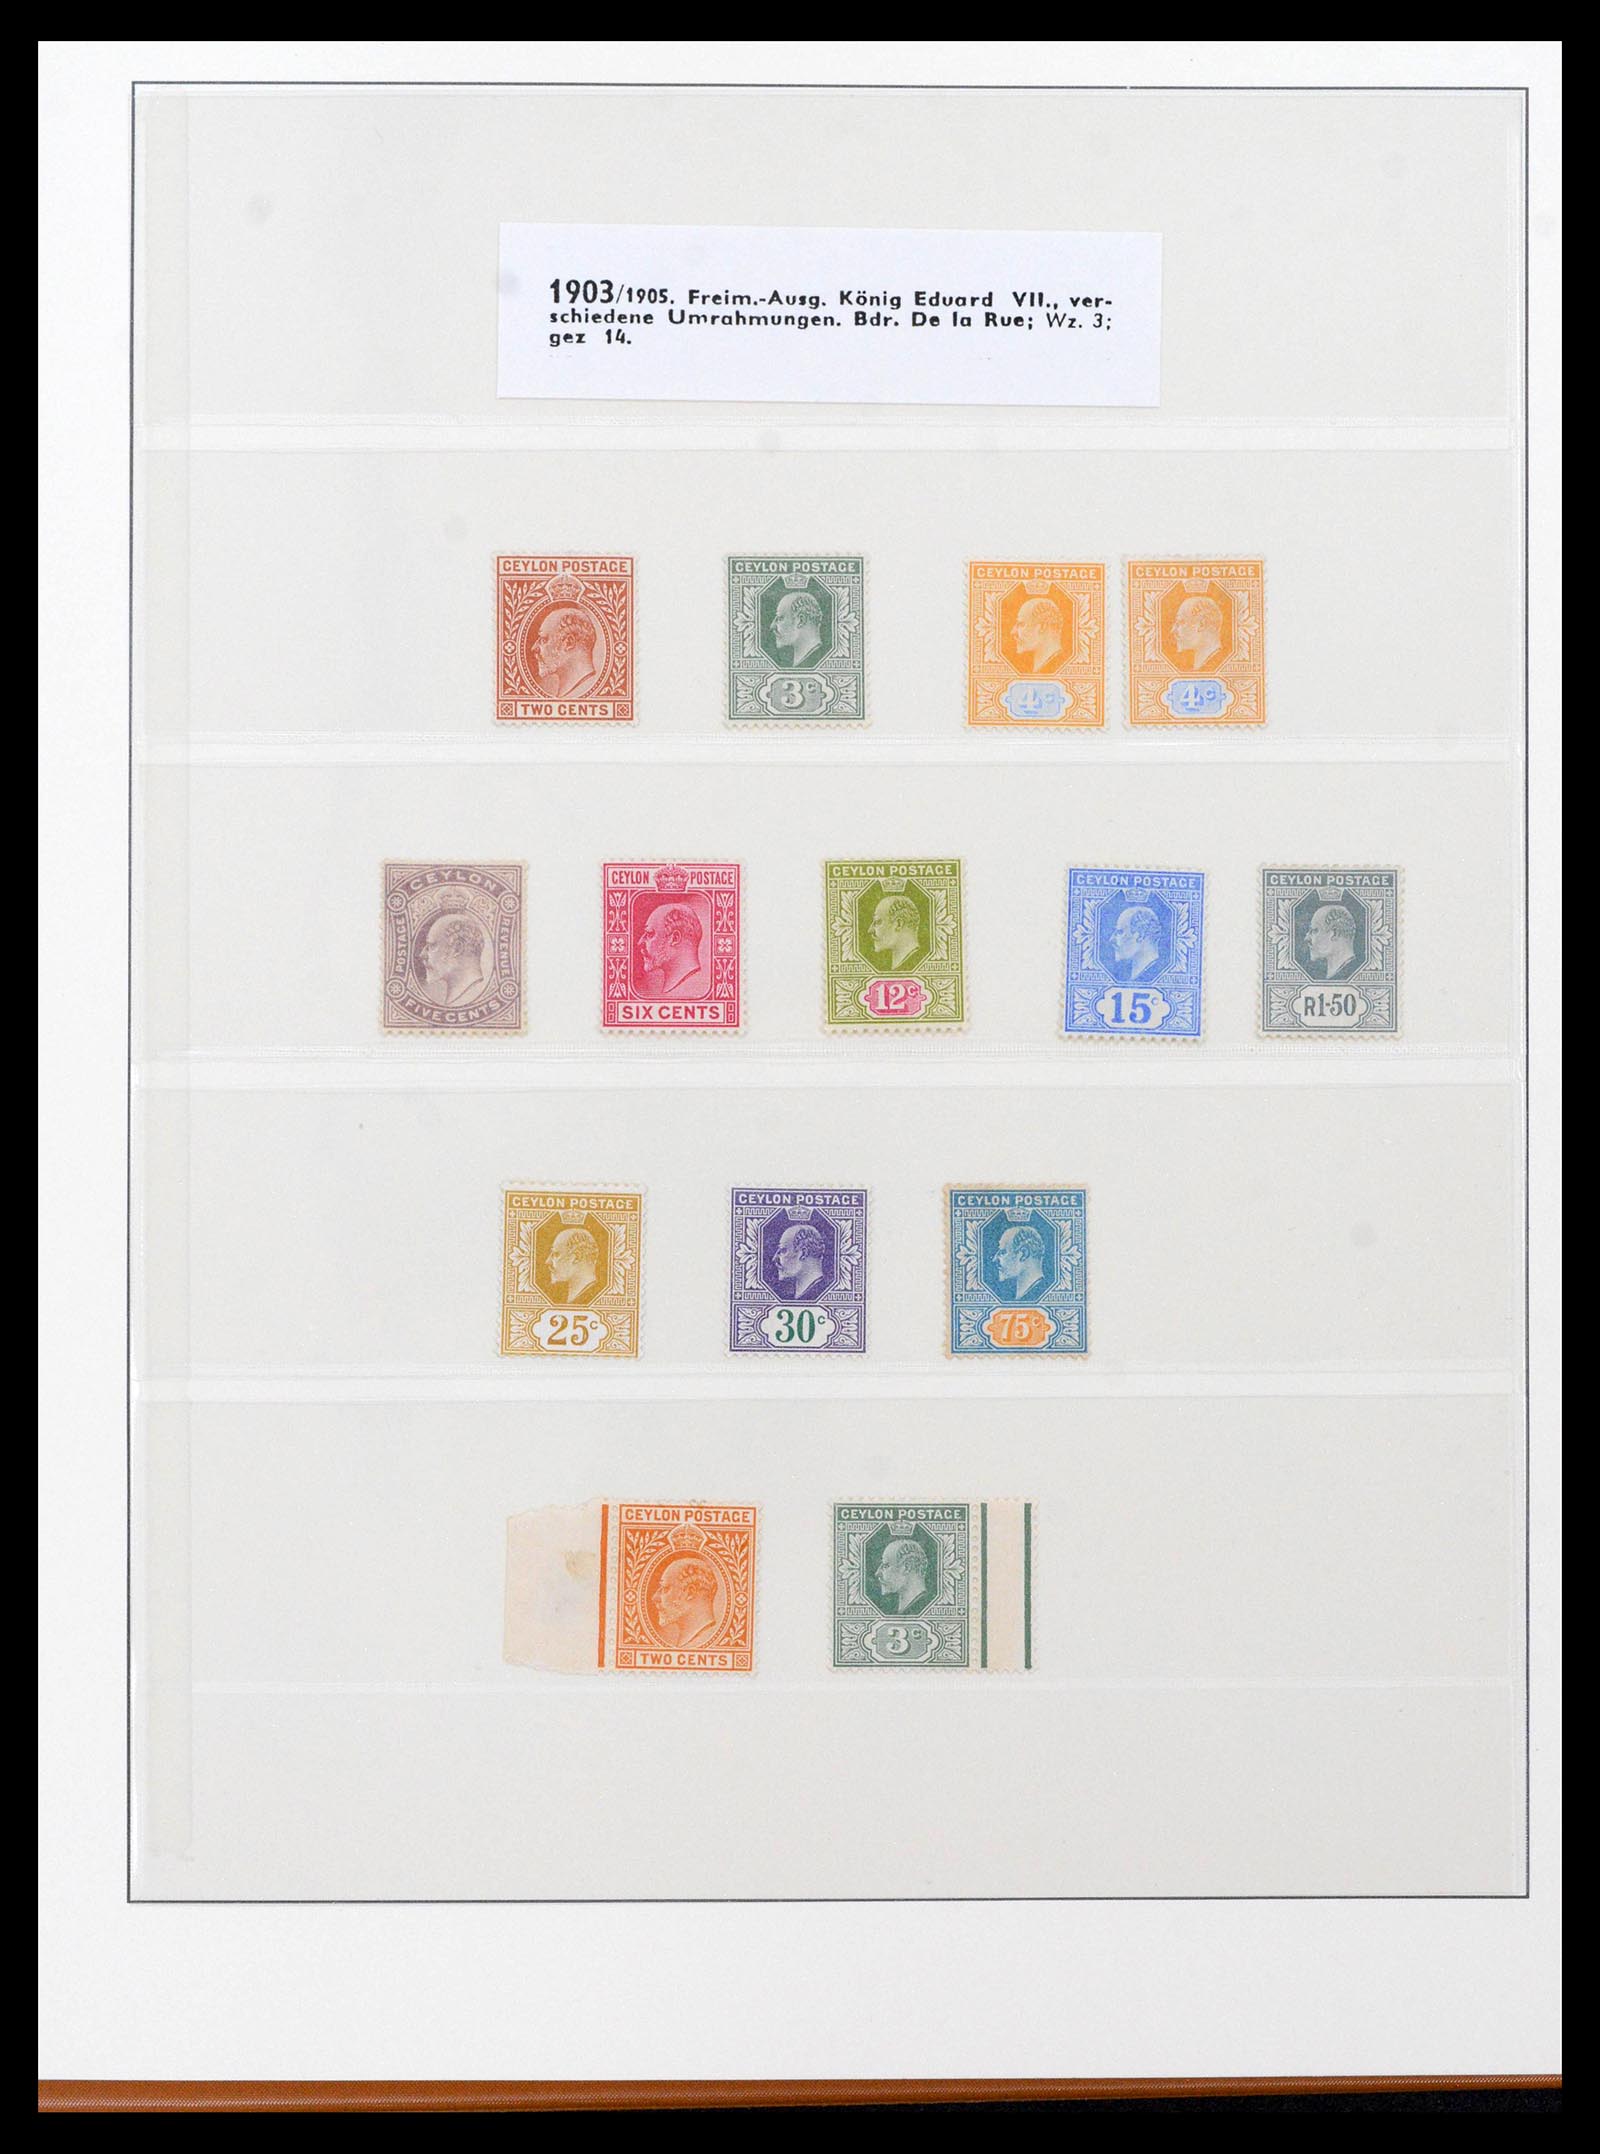 39003 0010 - Stamp collection 39003 Ceylon/Sri Lanka 1857-2003.